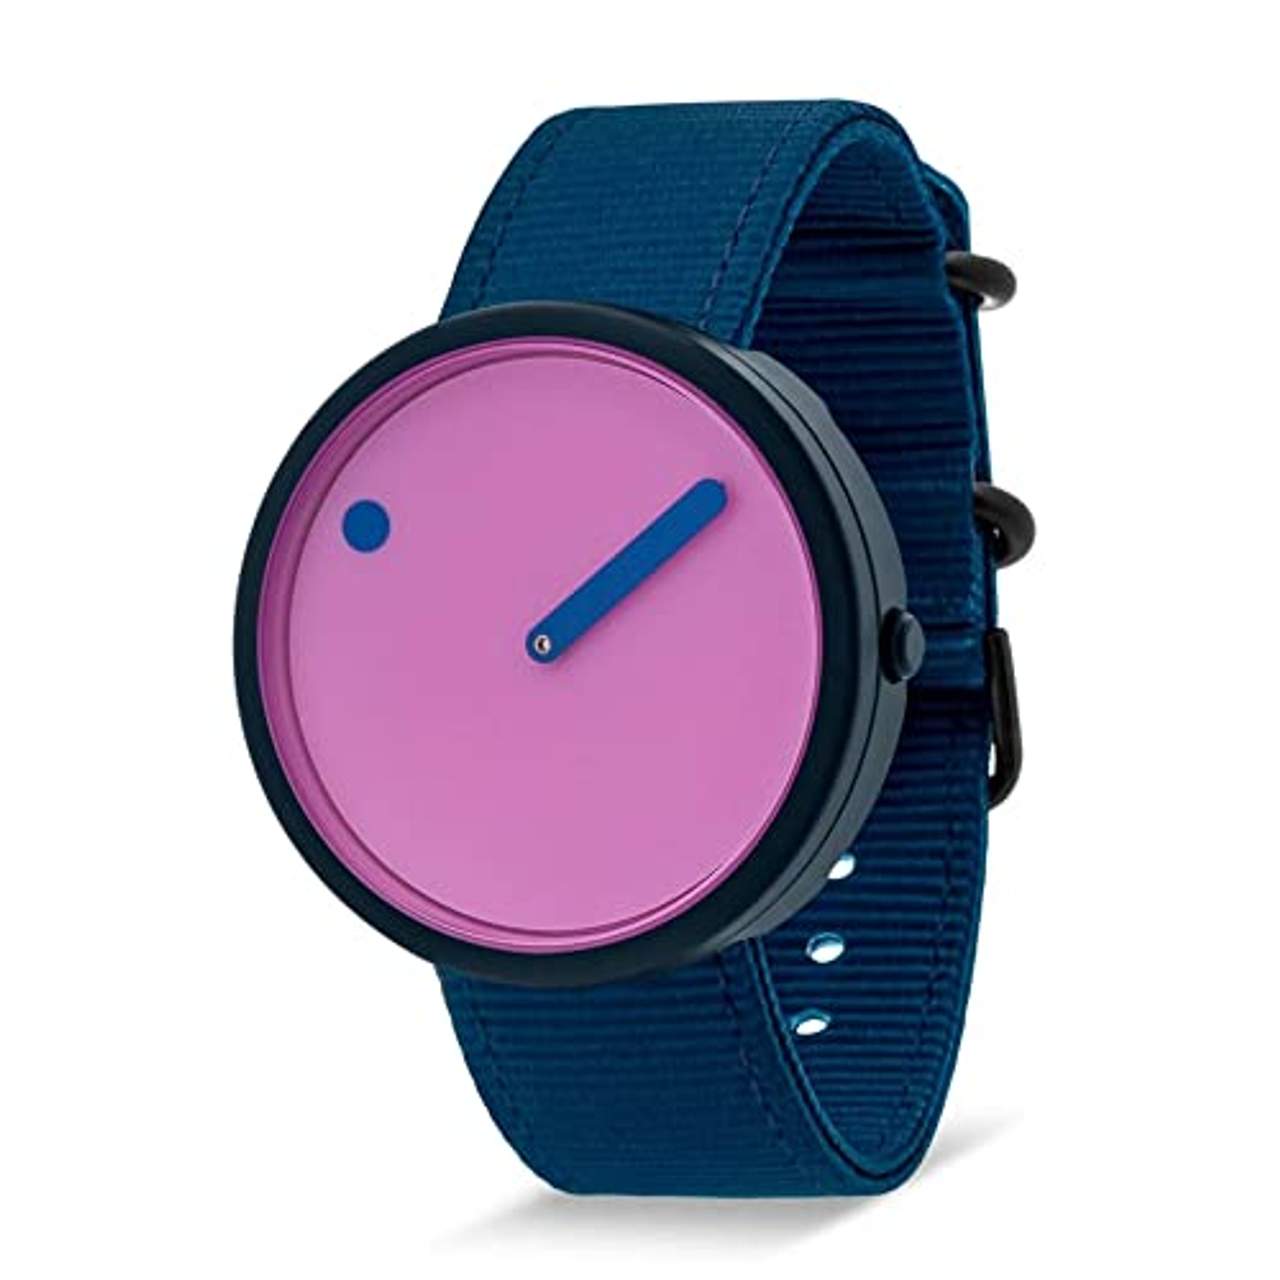 Picto Unisex-Uhren Analog Quarz One Size Blau